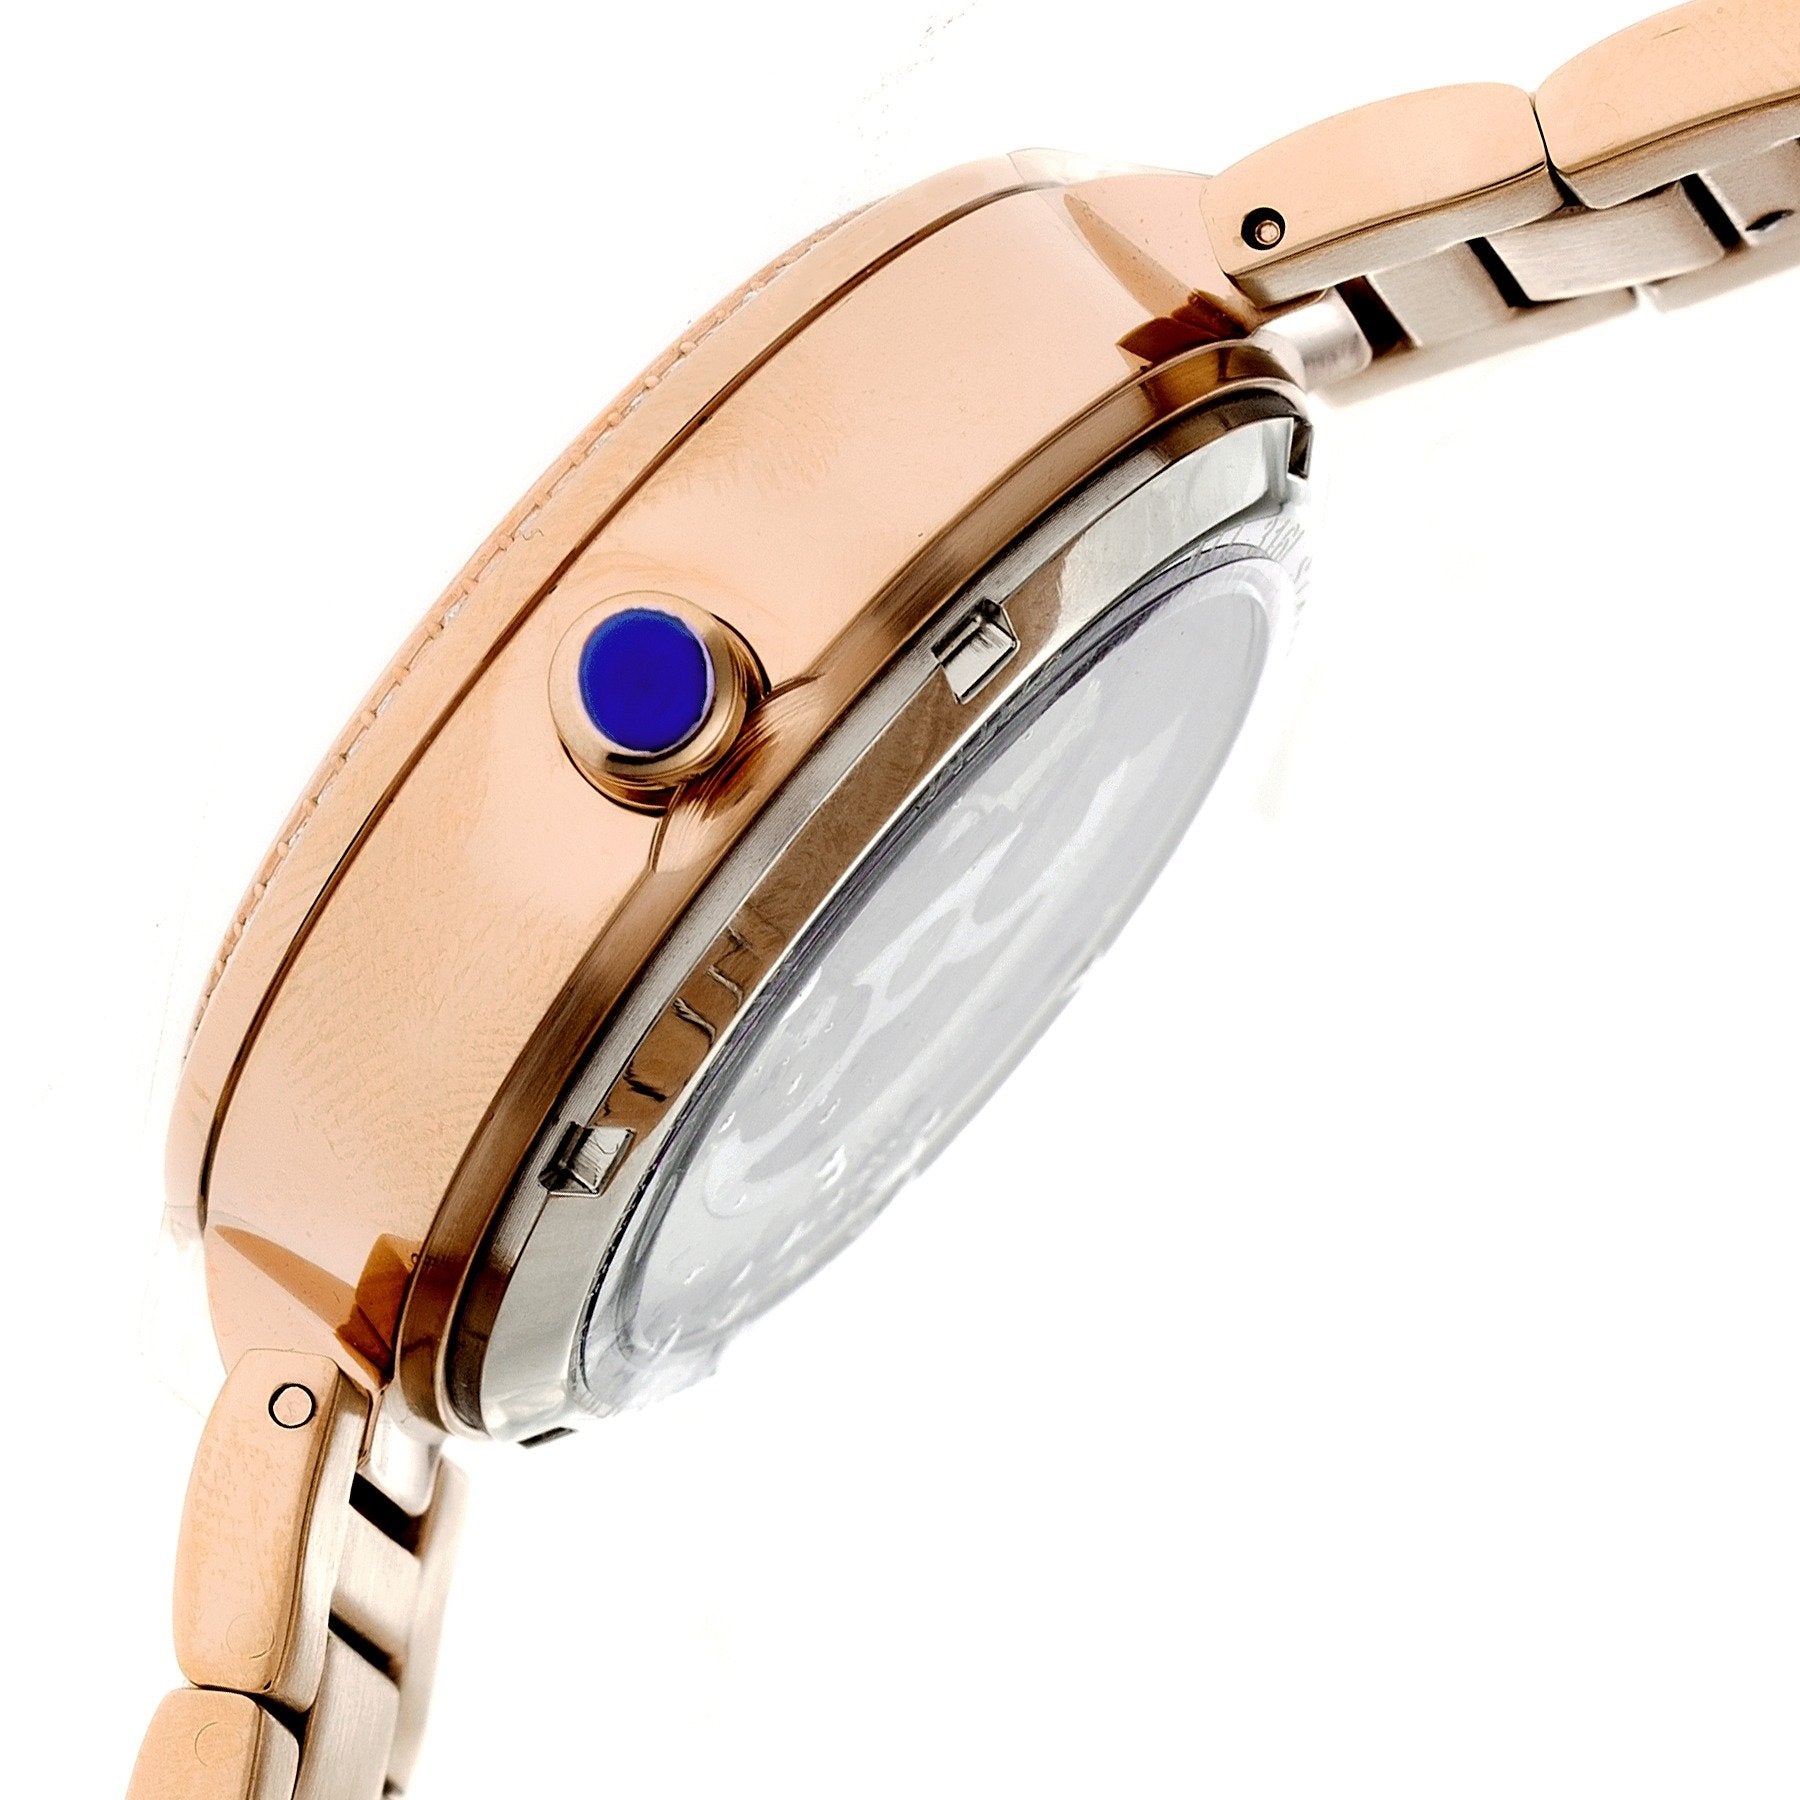 Empress Catherine Automatic Hammered Dial Bracelet Watch - Blue - EMPEM1905